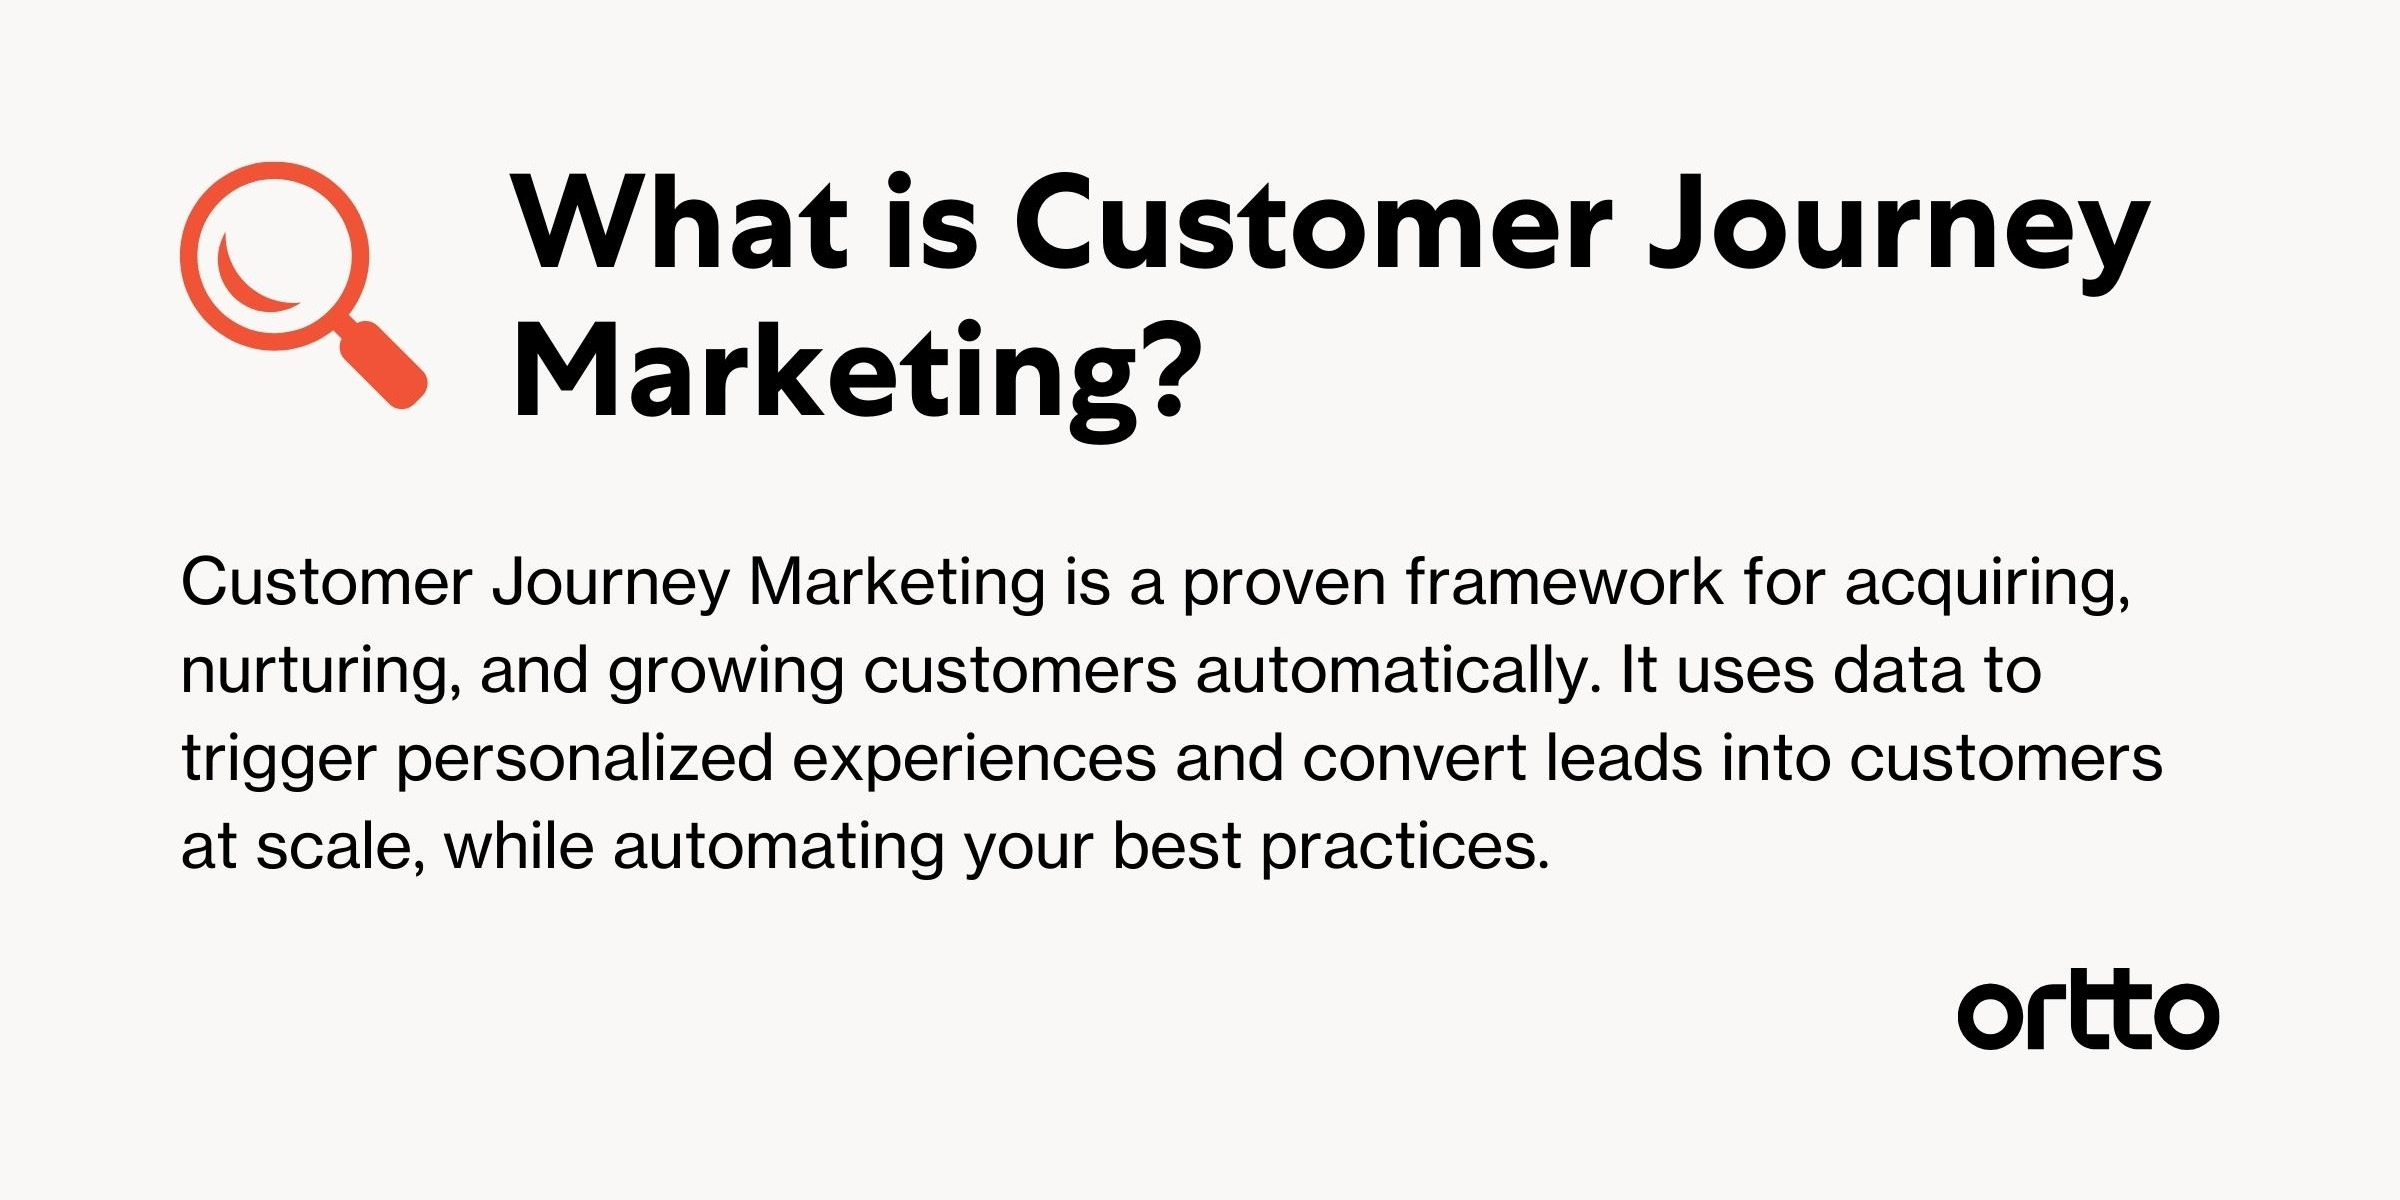 customer journey marketing definition